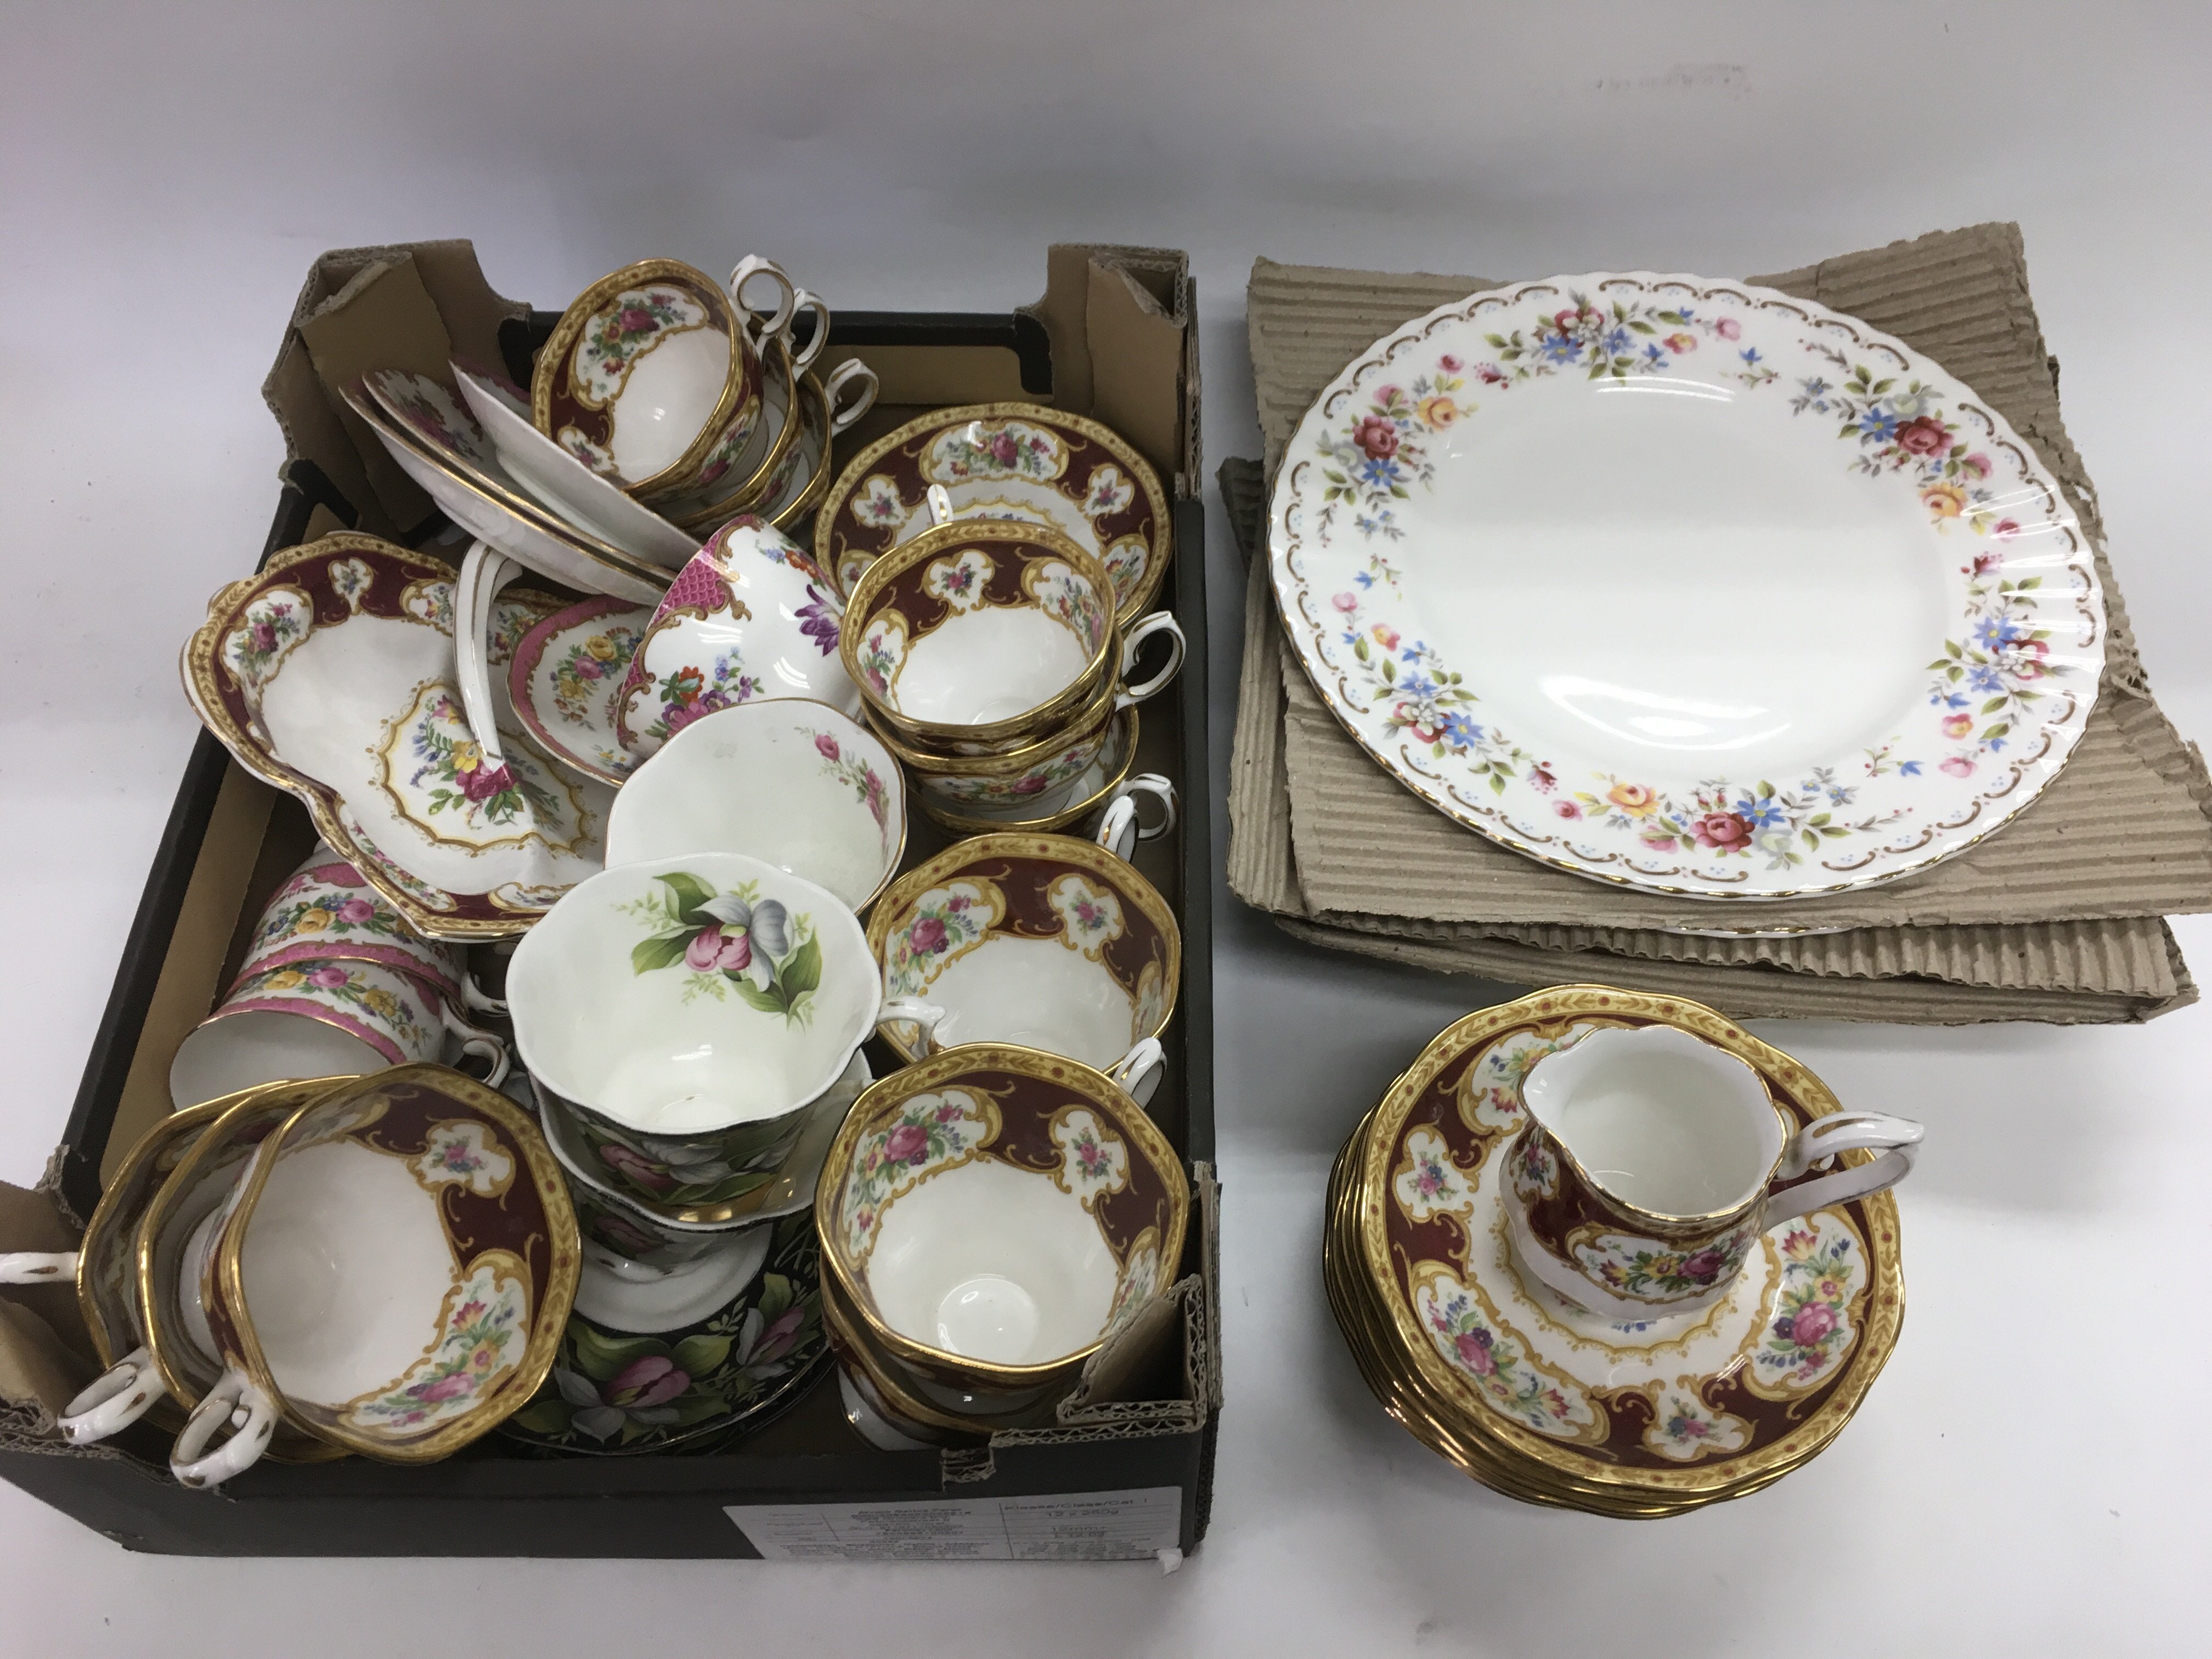 A Royal Albert tea service in the 'Lady Hamilton' pattern plus other Royal Albert tableware.